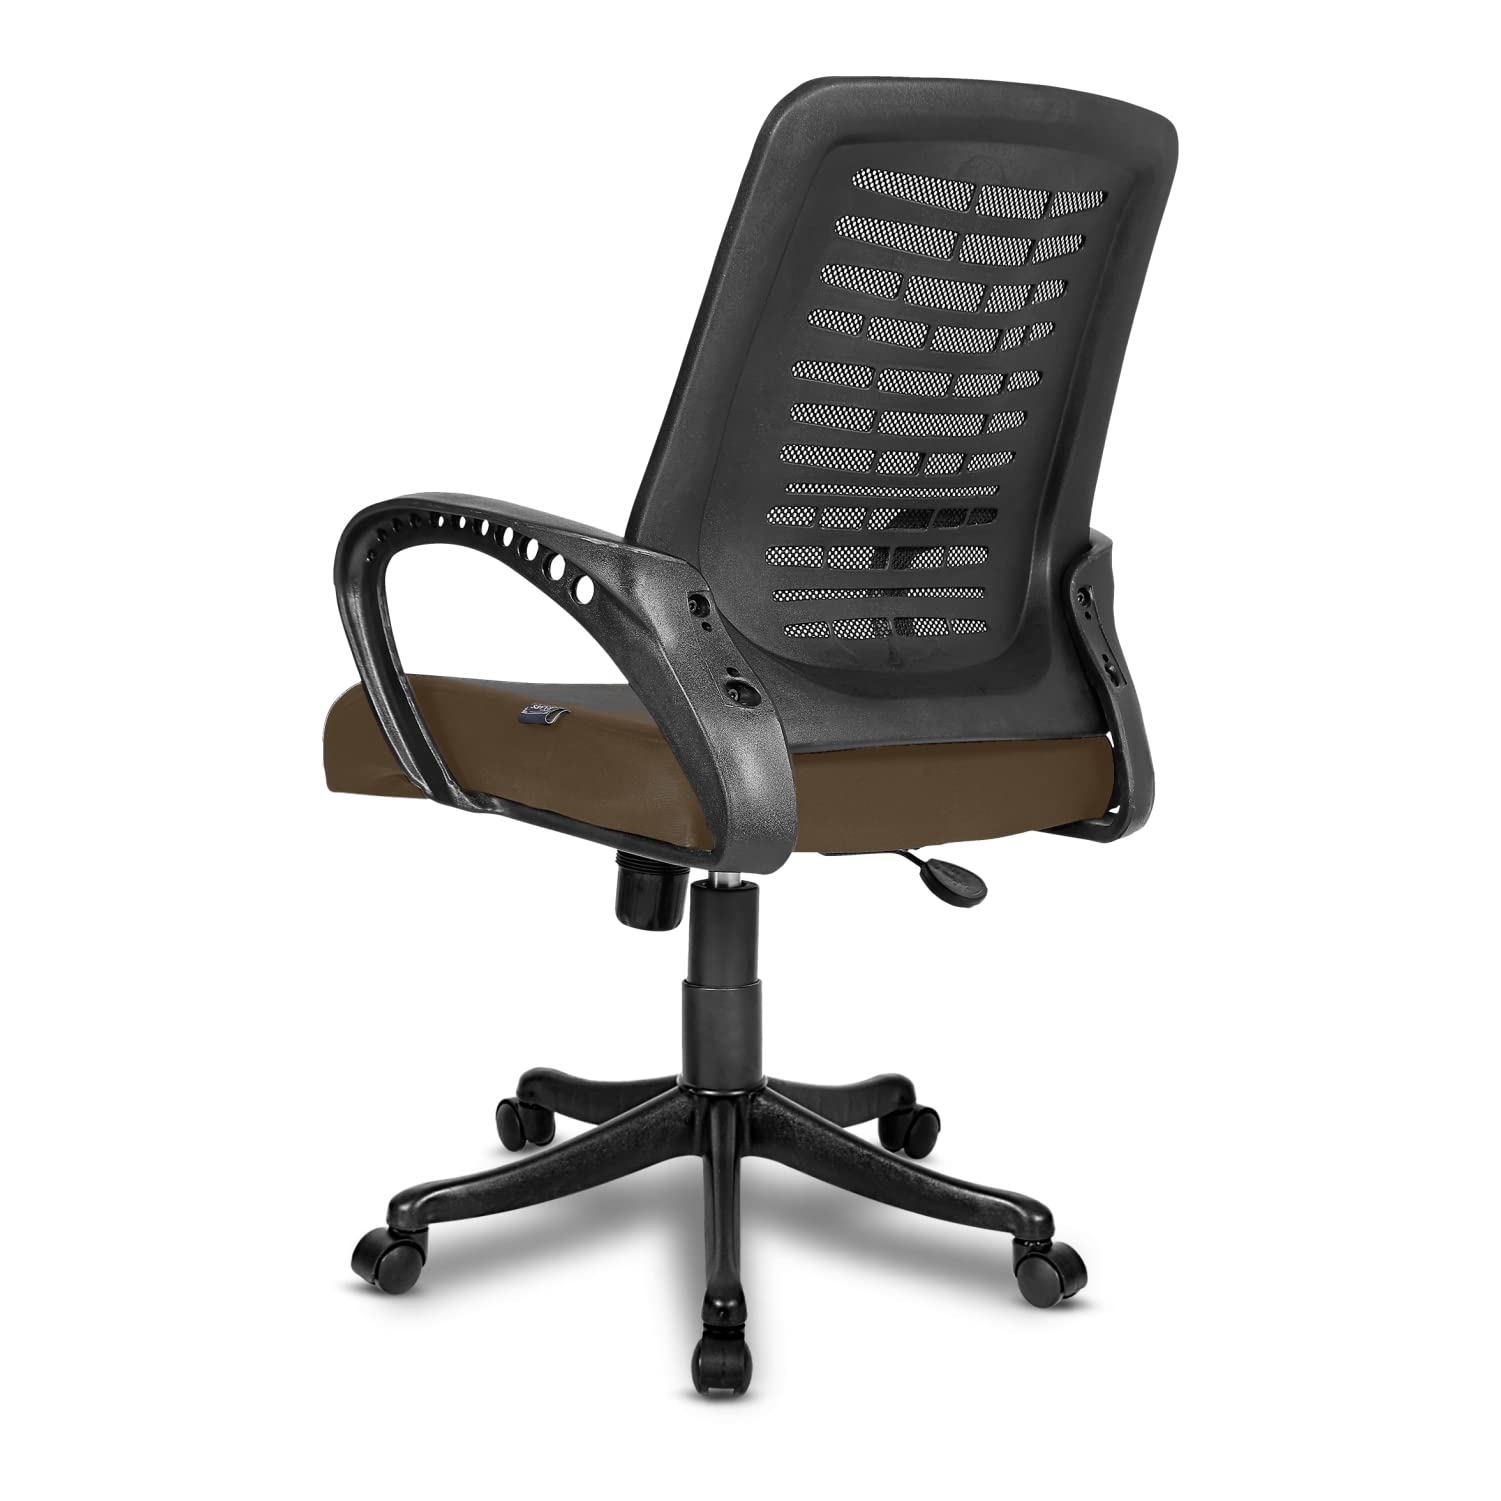 SAVYA HOME Apex Zoom Ergonomic Home and Revolving Office Chair (Beige)